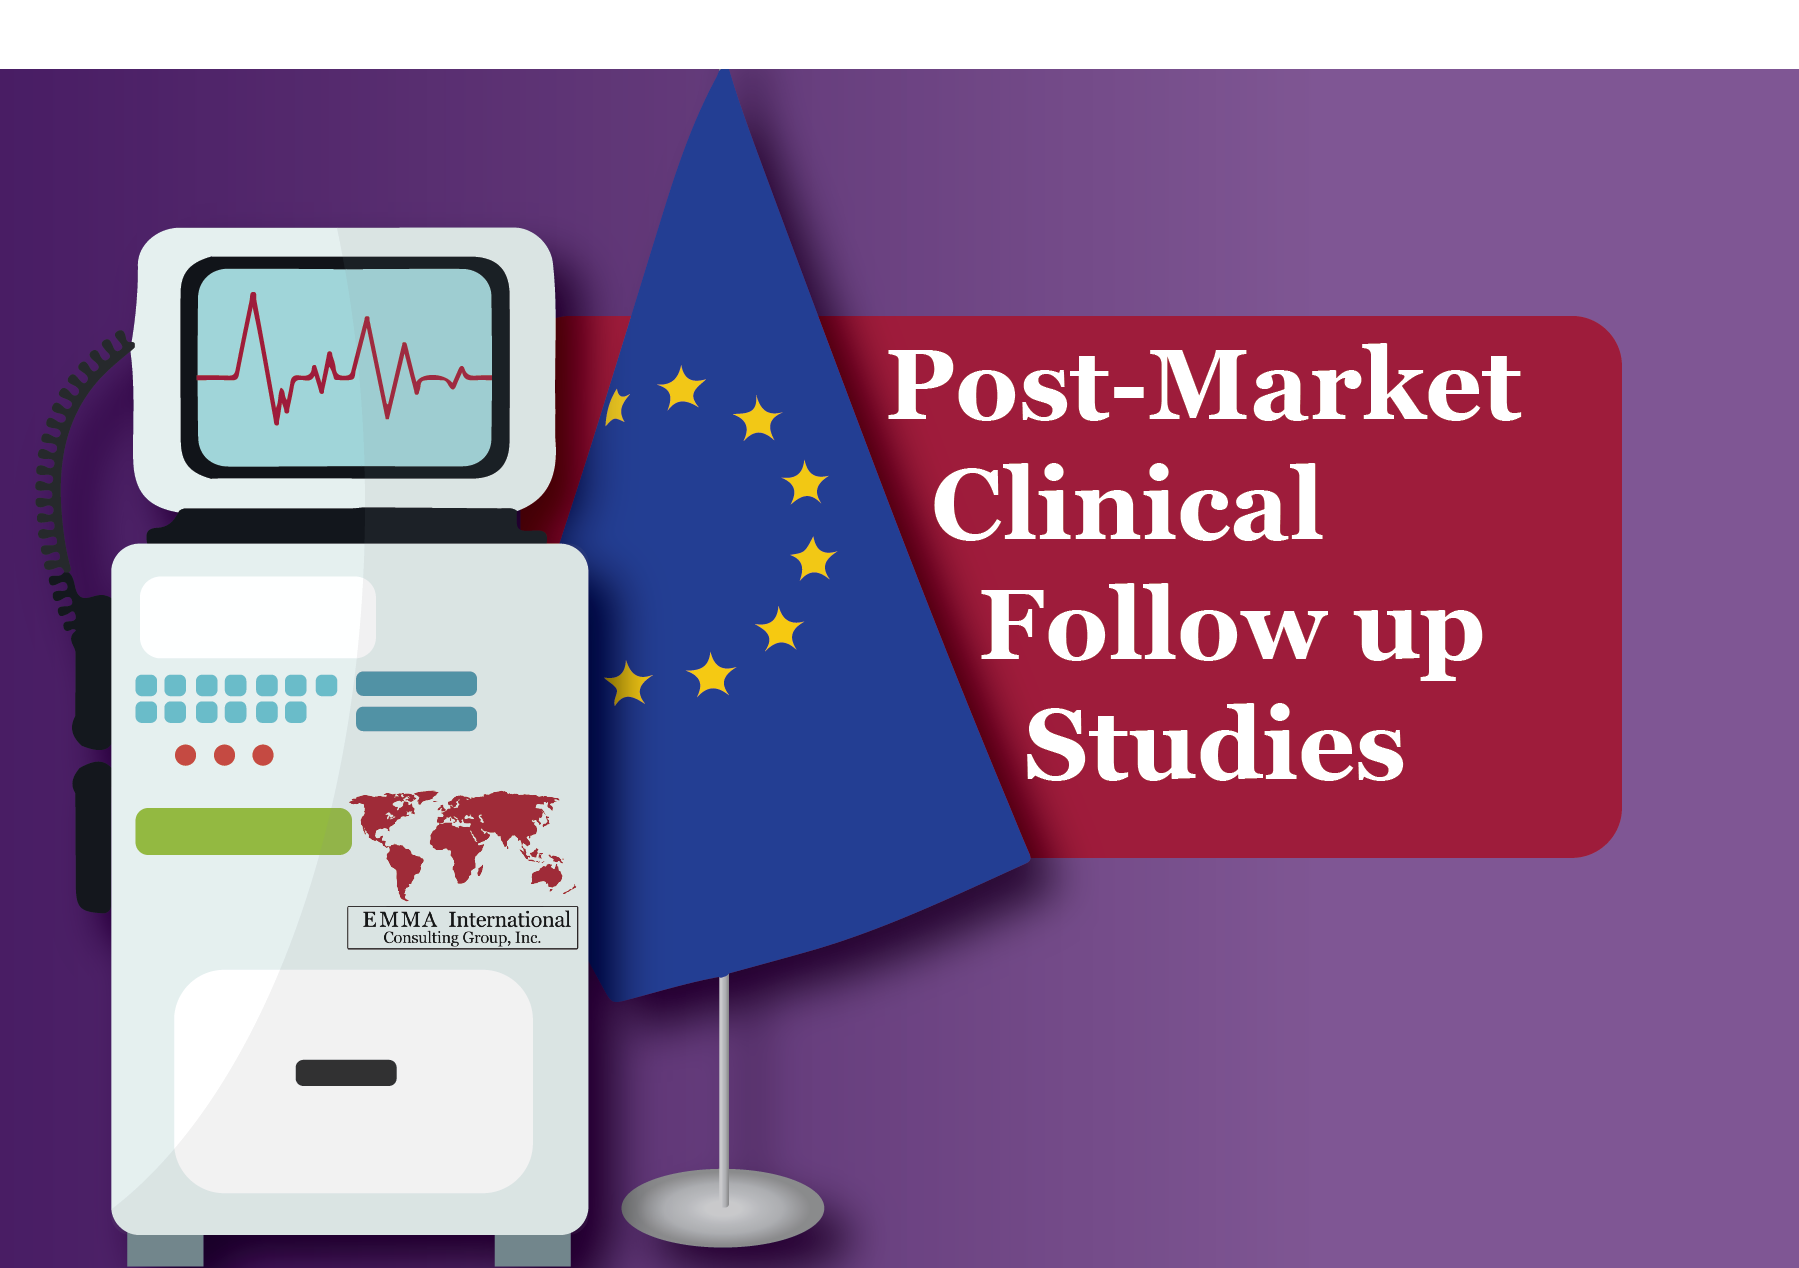 Post-Market Clinical Follow up Studies